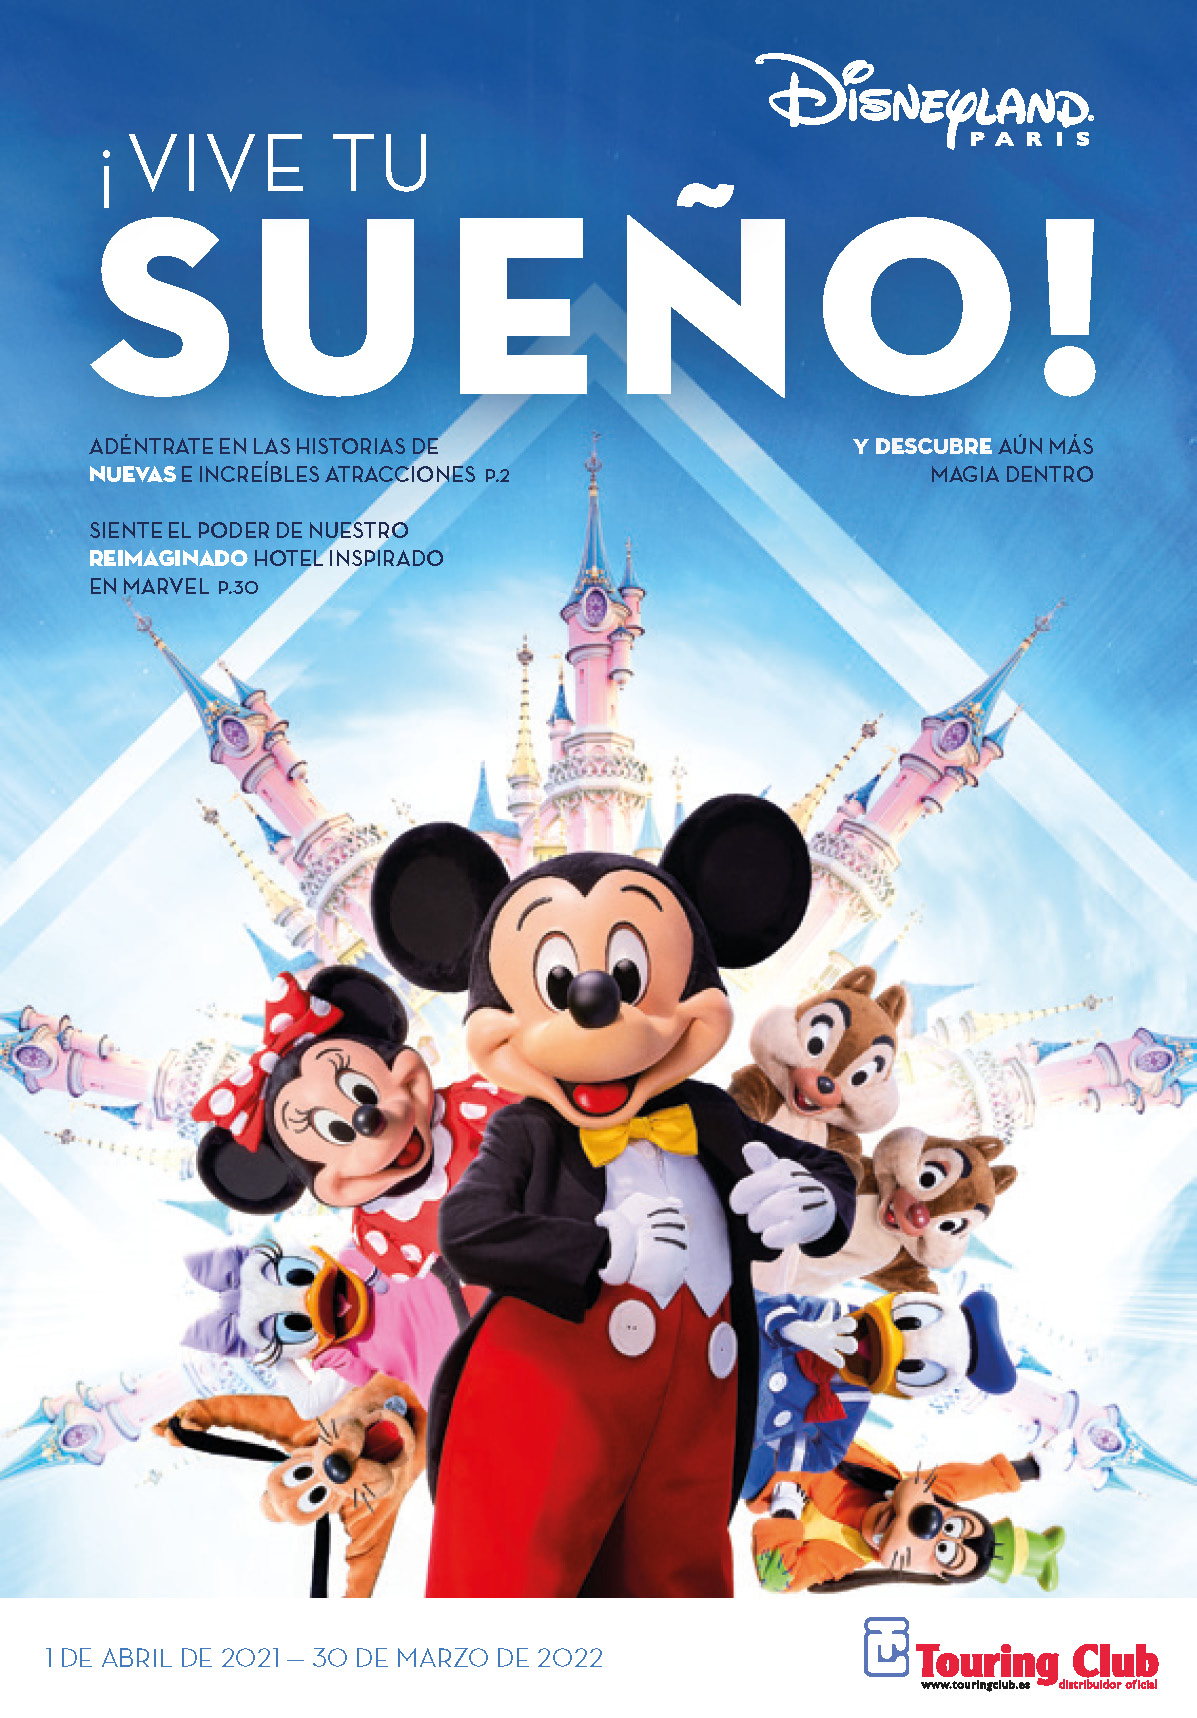 Catalogo Touring Club Disneyland Paris 2021-2022